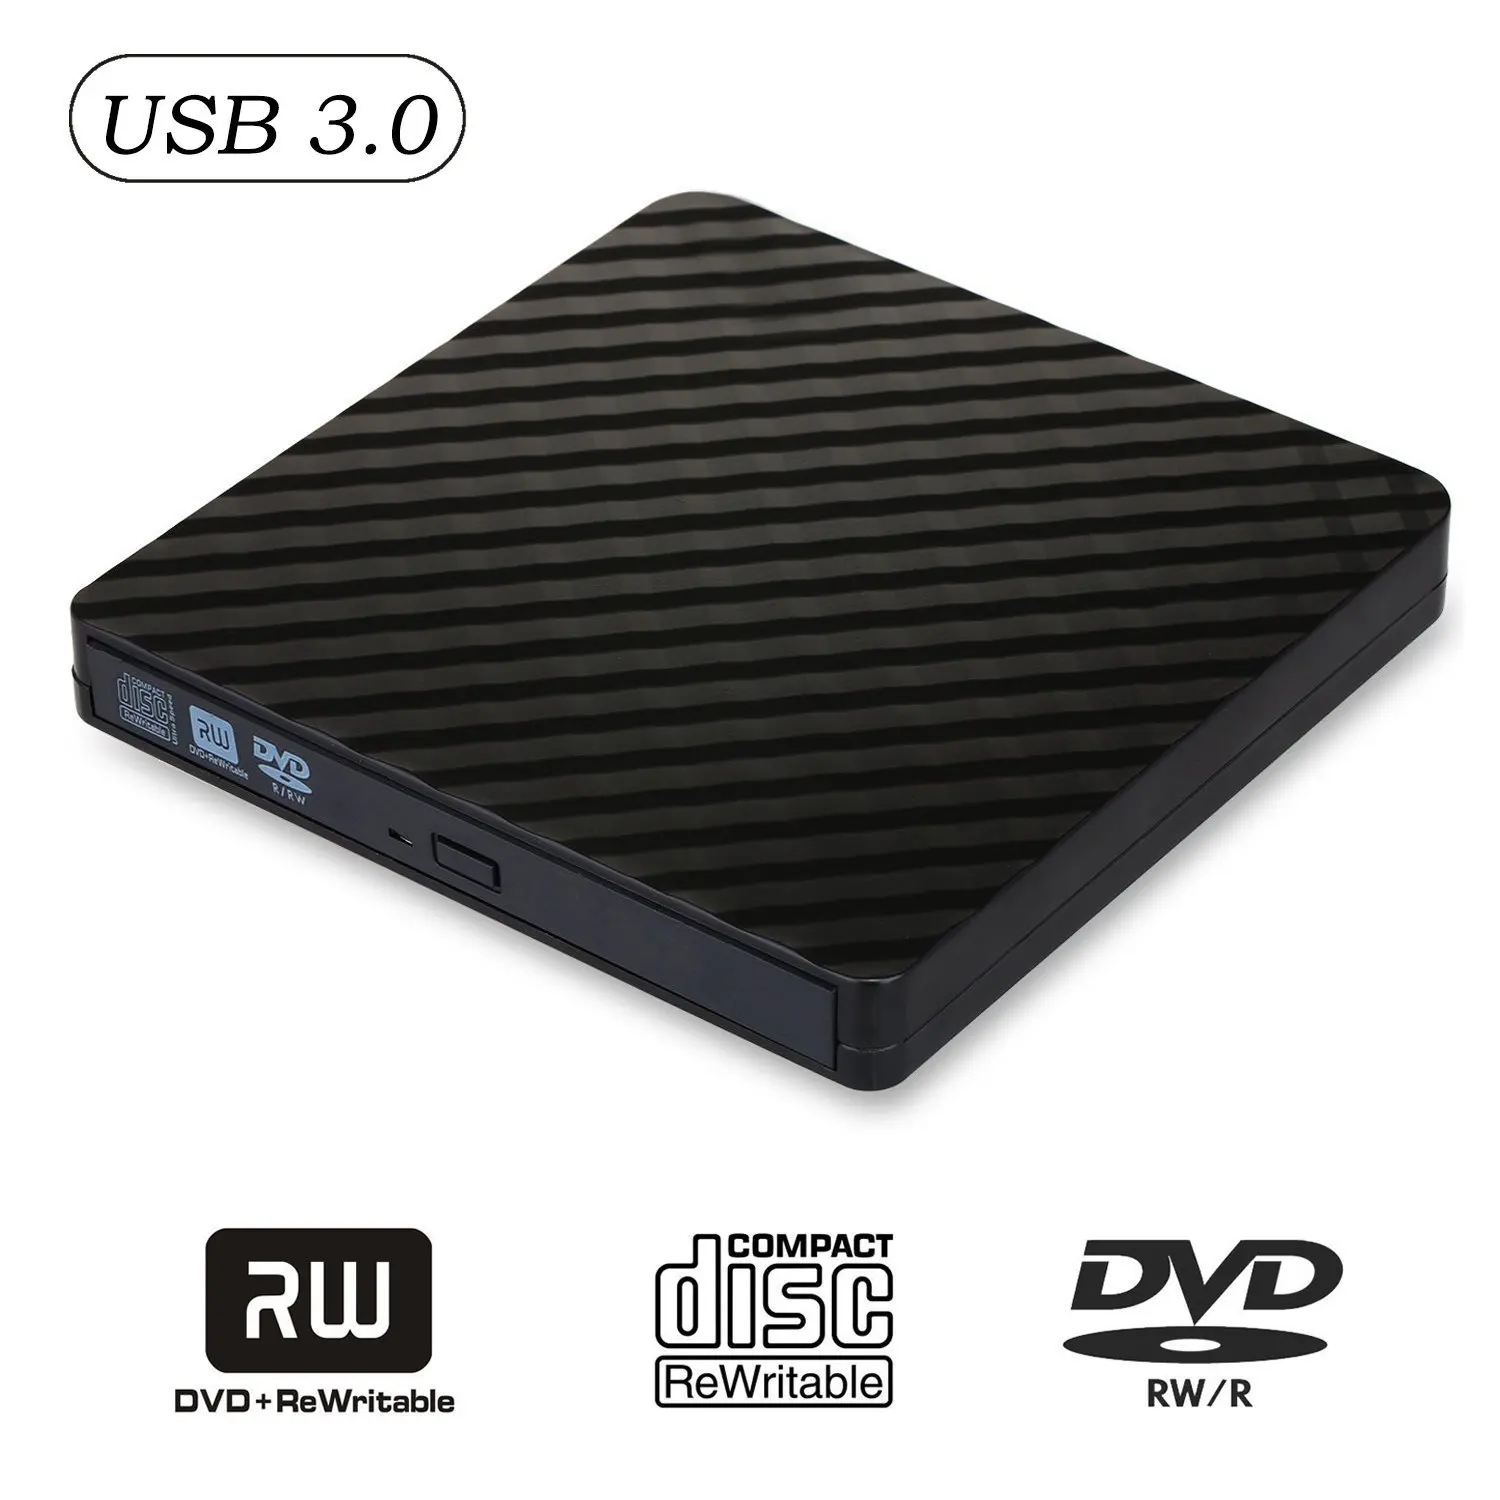 USB3.0 External DVD RW CD Writer Slim Optical Drive Burner Reader Player Tray Type Portable For PC Laptop